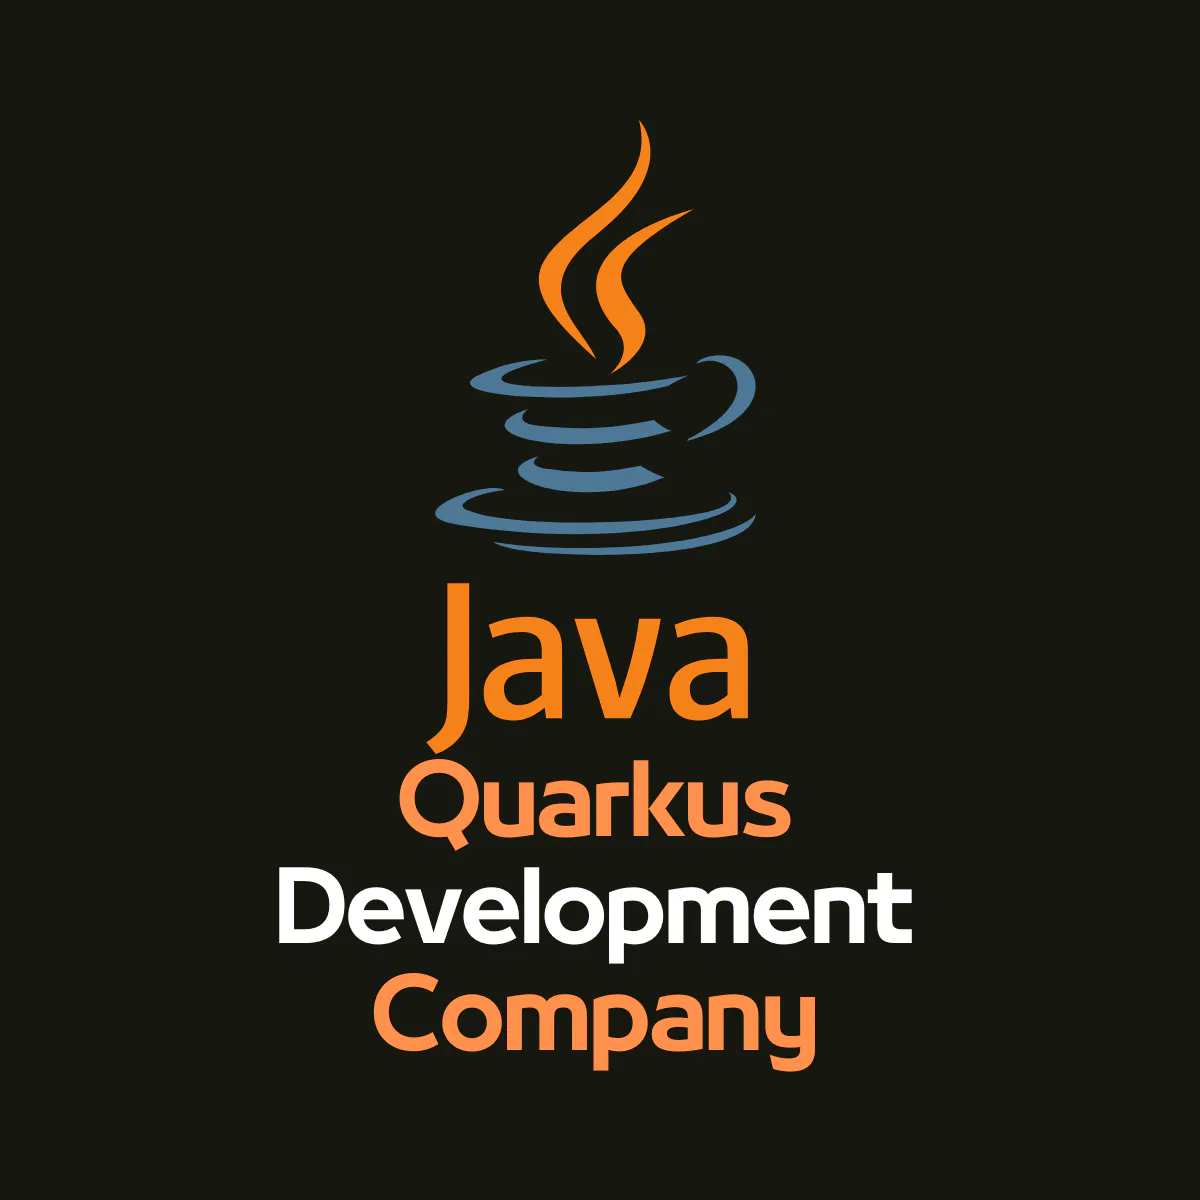 Quarkus Development